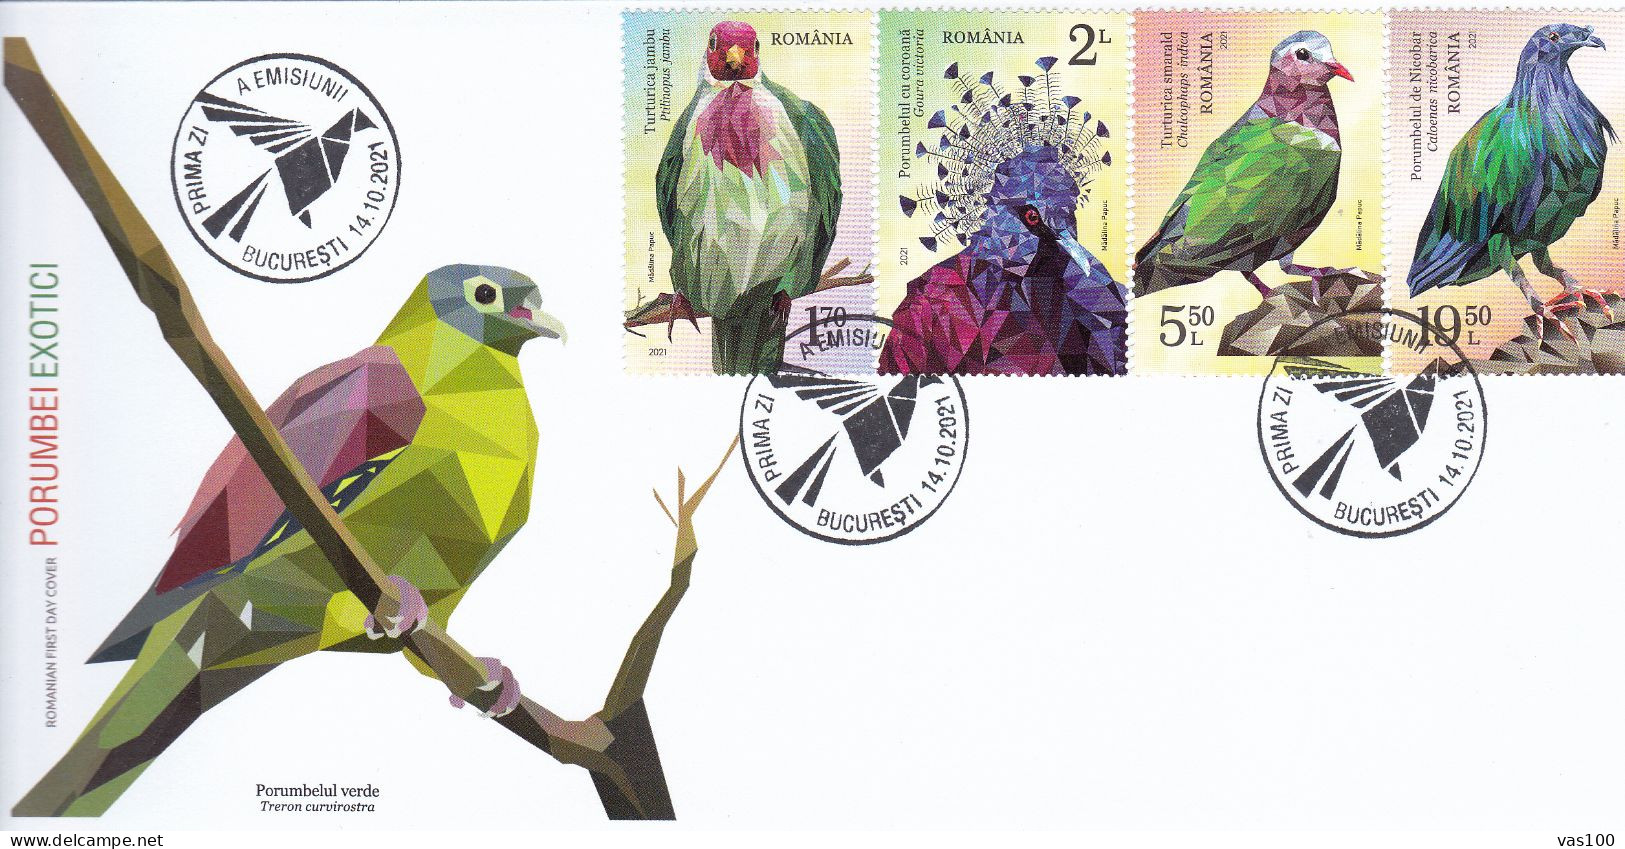 BIRDS EXOTIC PIGEONS ,2021 COVERS  FDC , ROMANIA. - Pigeons & Columbiformes